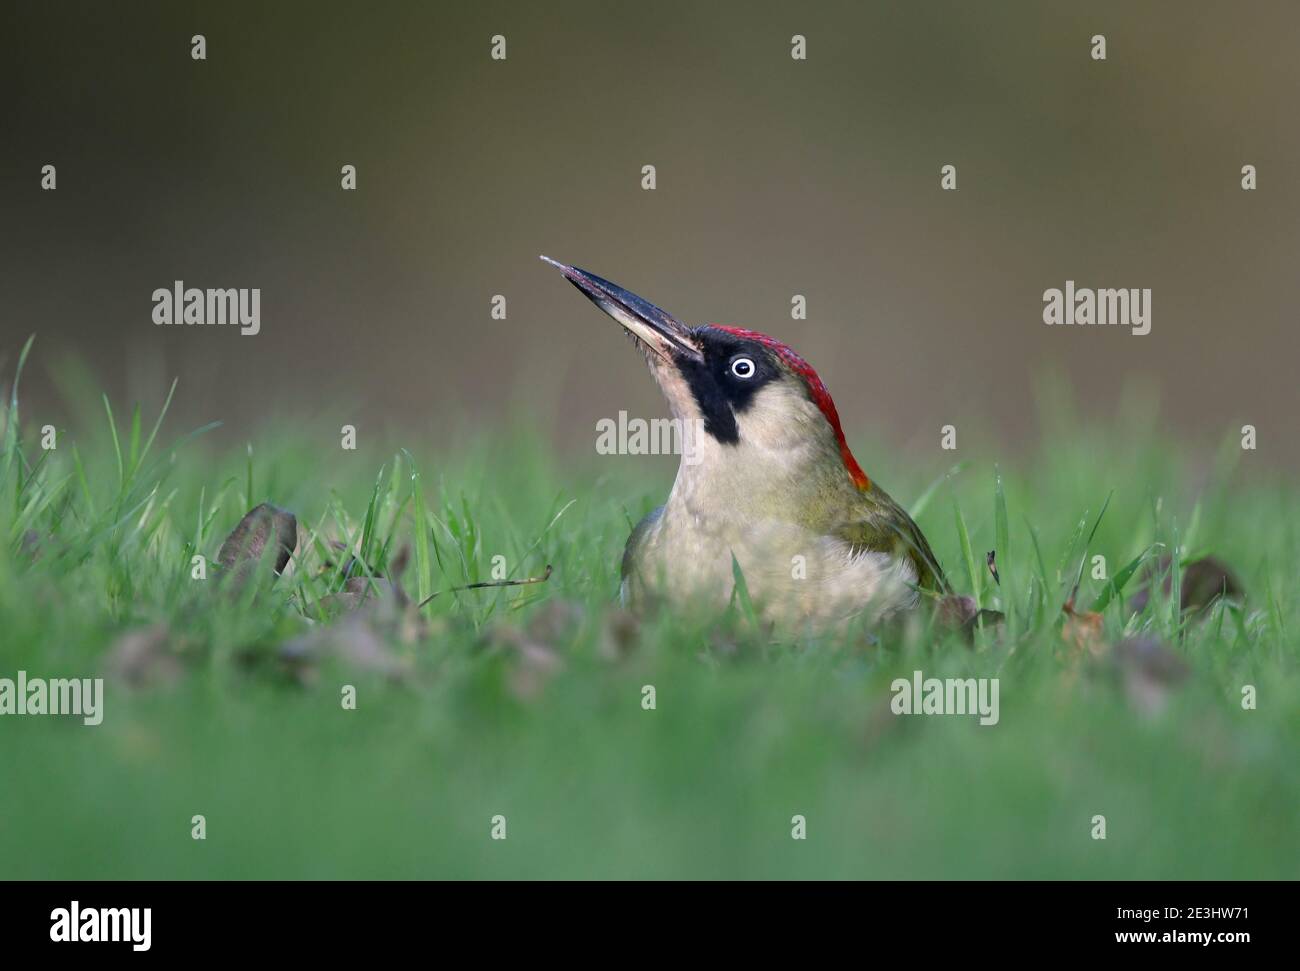 Green Woodpecker (Picus viridis) female on grassy ground, feeding on fallen fruit, tongue extended, Wales, November Stock Photo